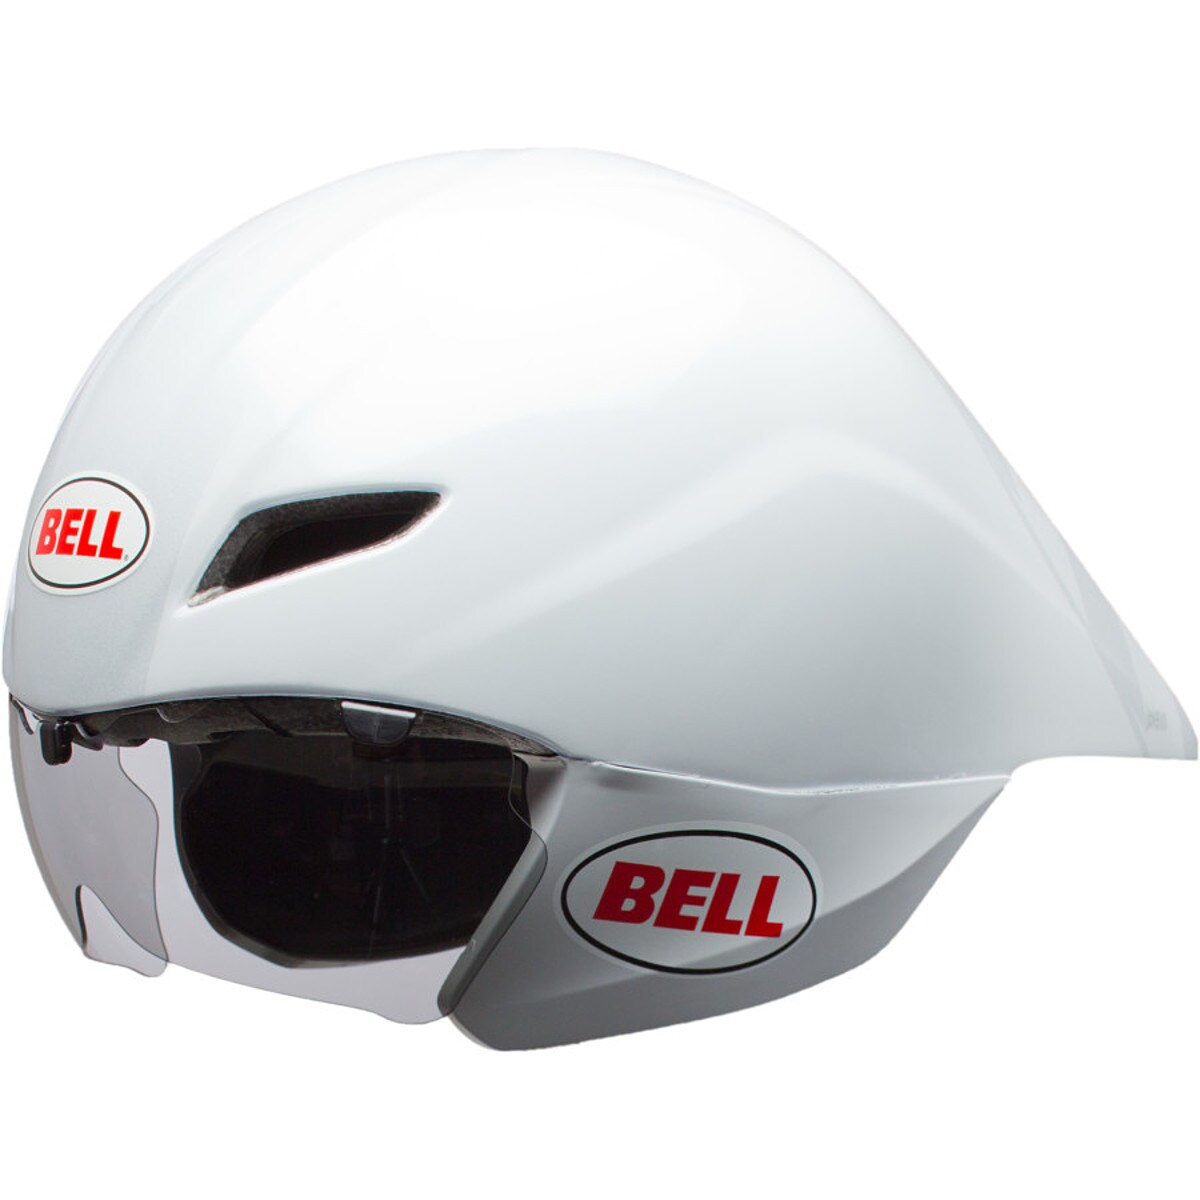 Bell Javelin Helmet - Men's